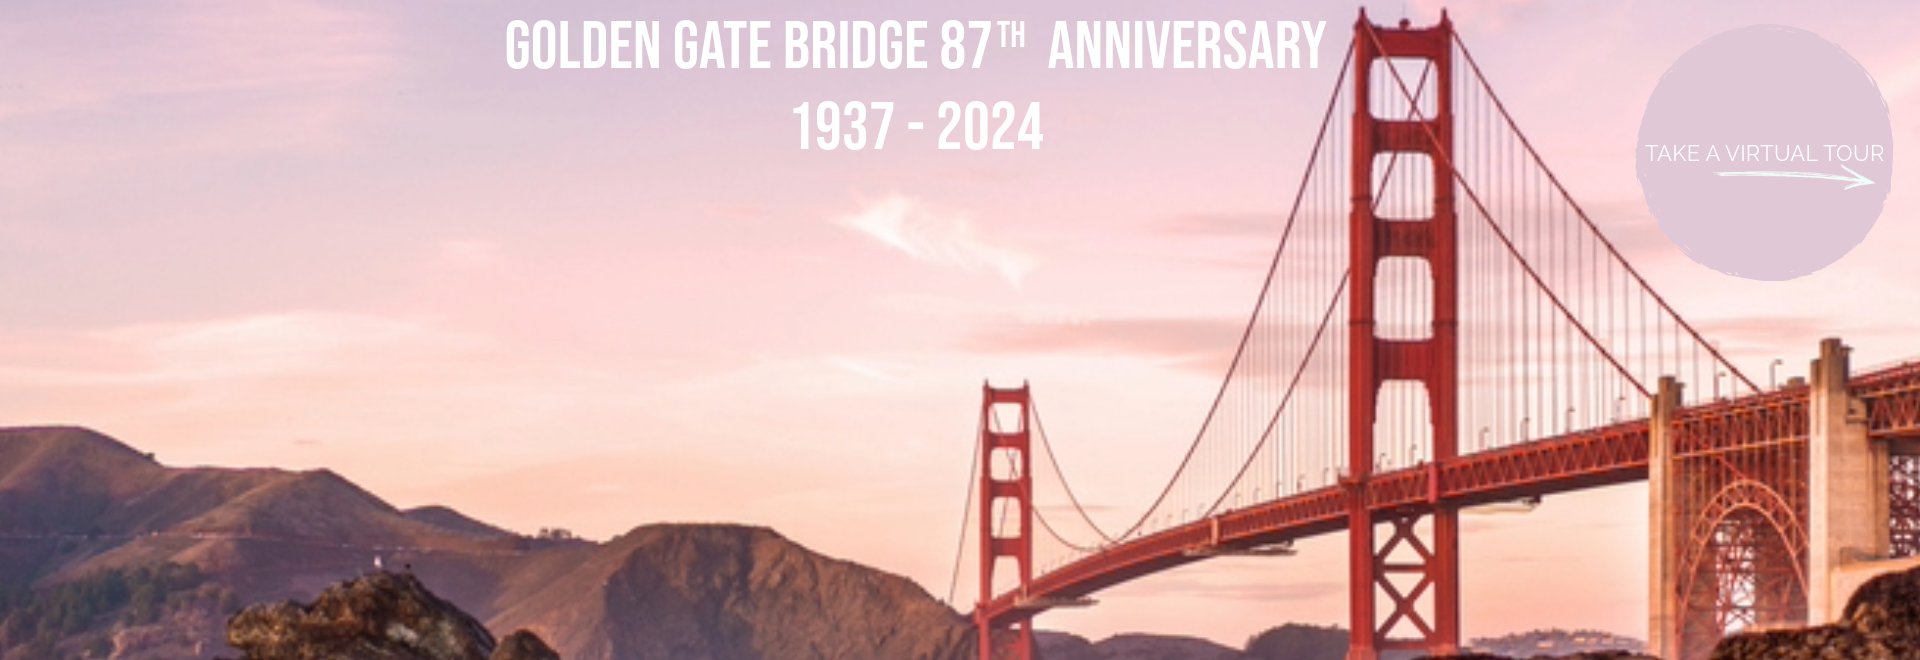 Golden Gate Bridge Celebrates its 87th Anniversary